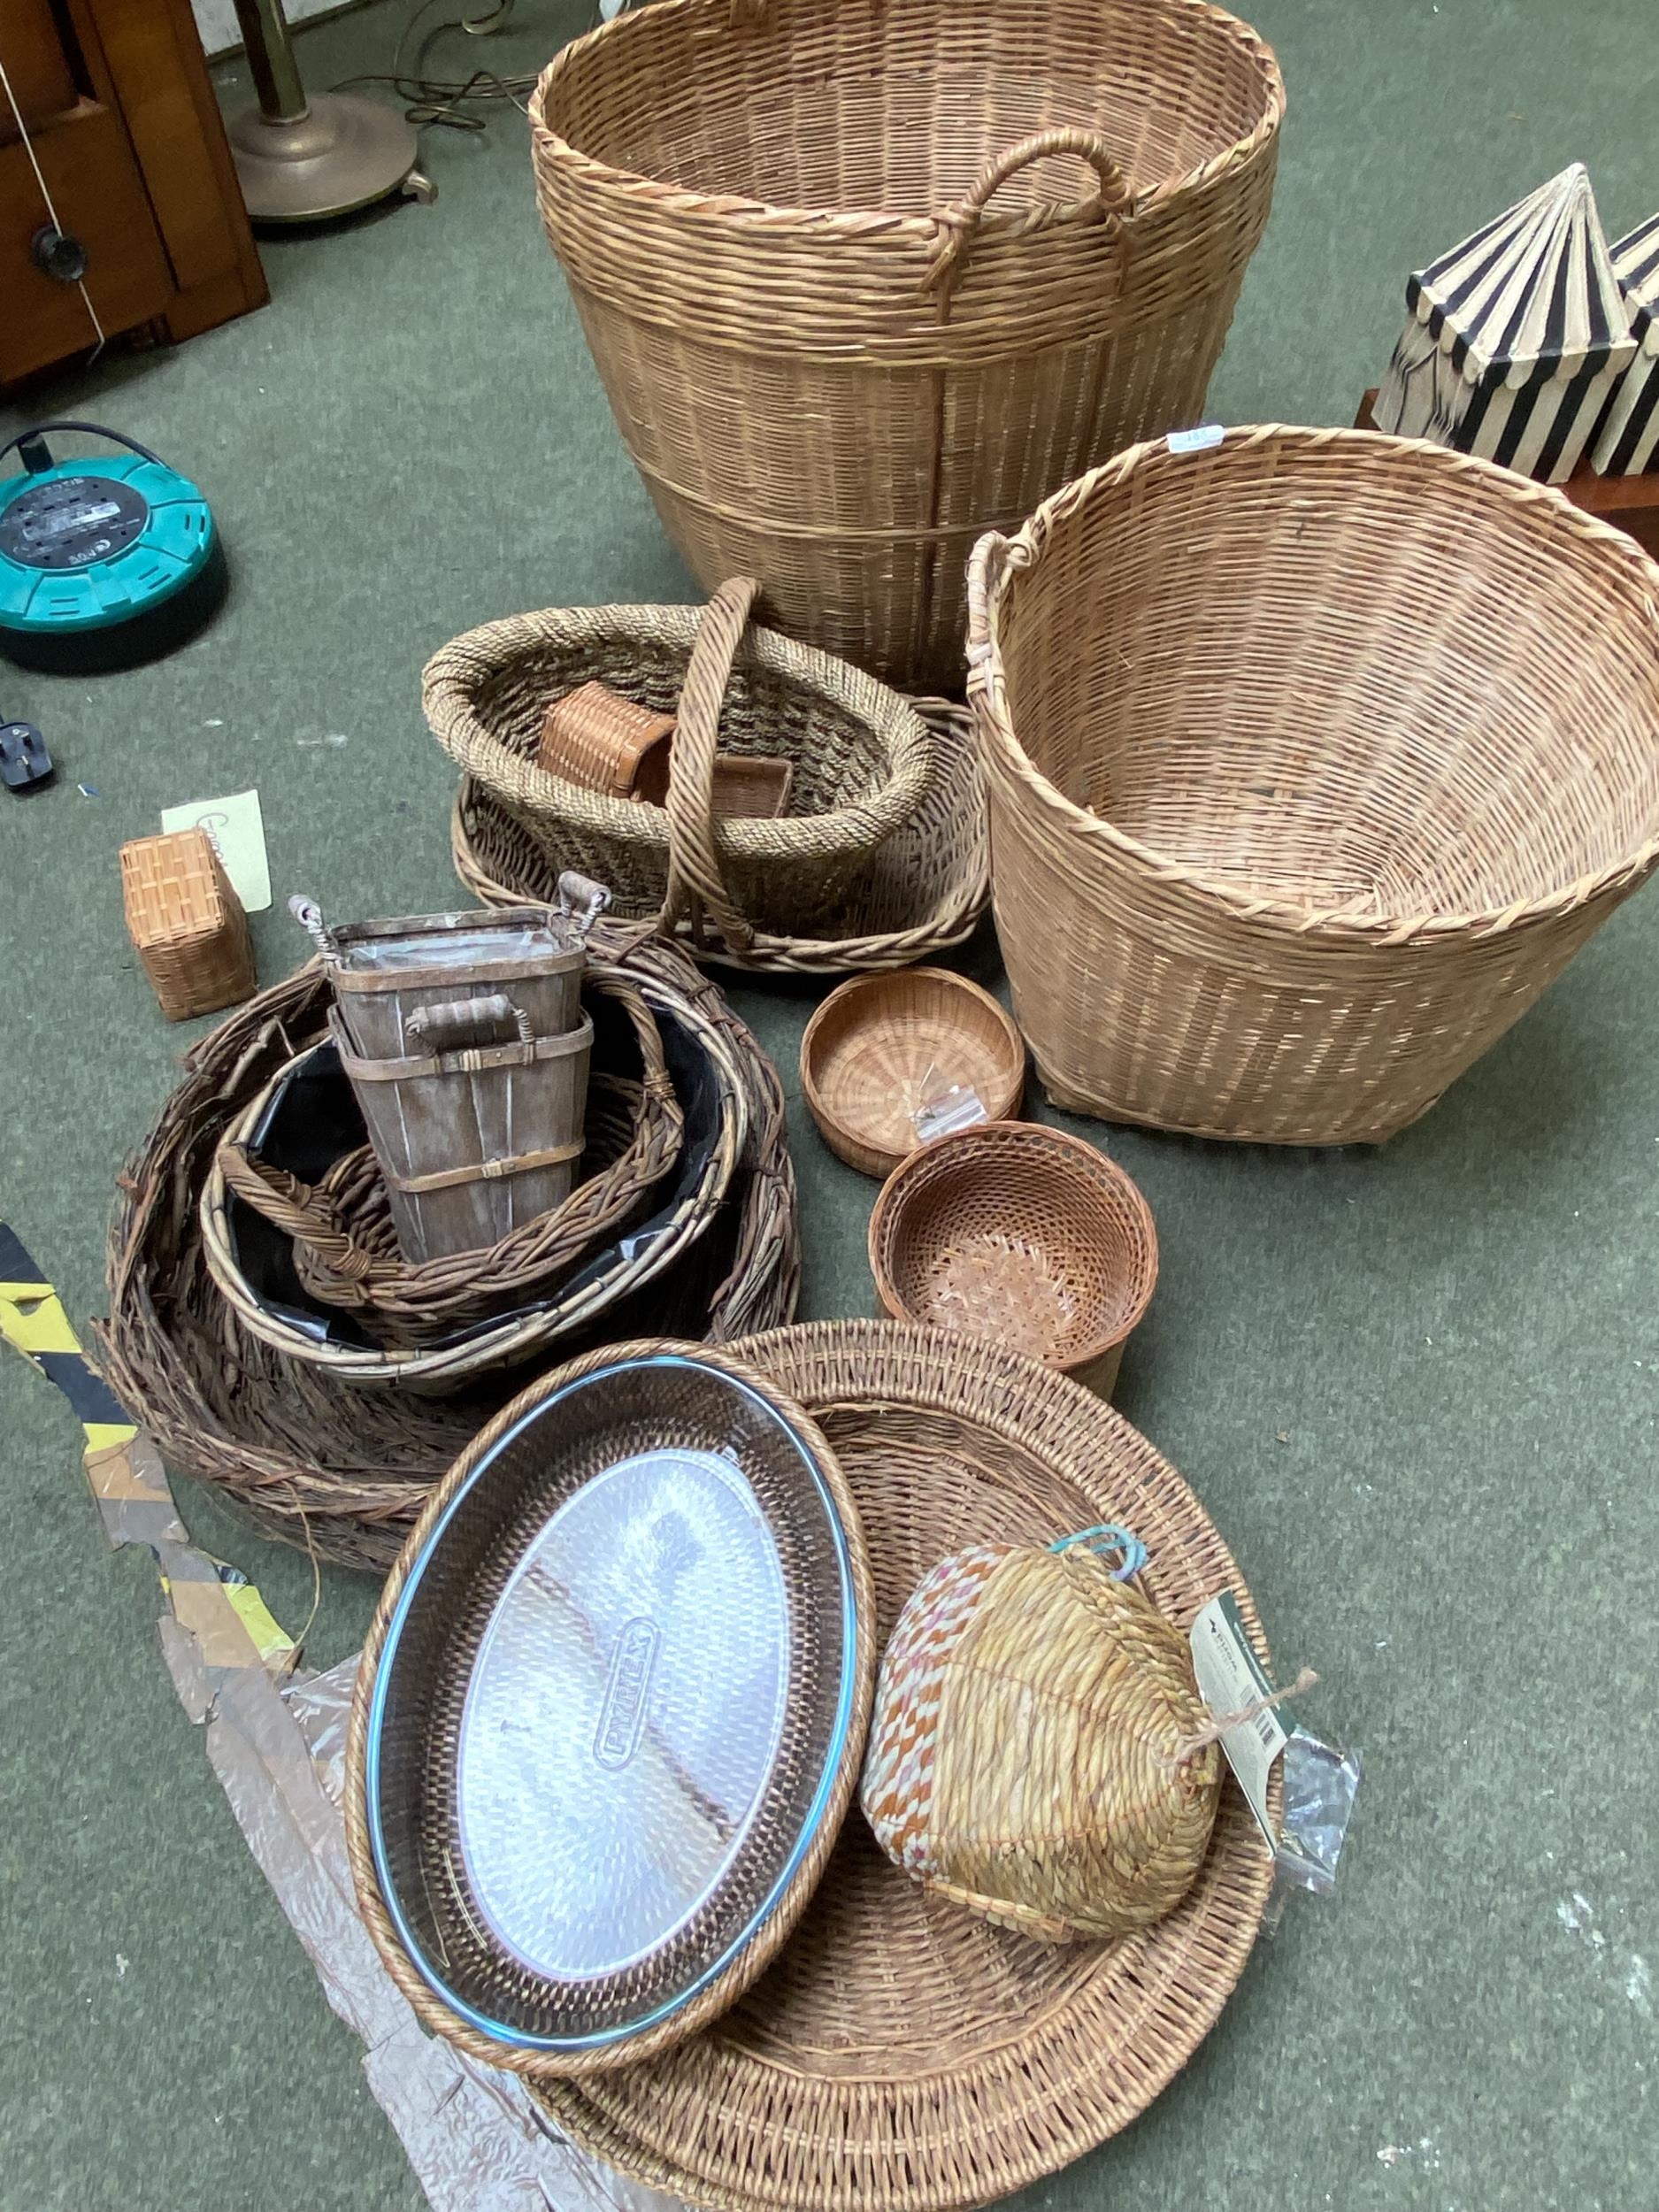 Quantity of various basketwares, all as found